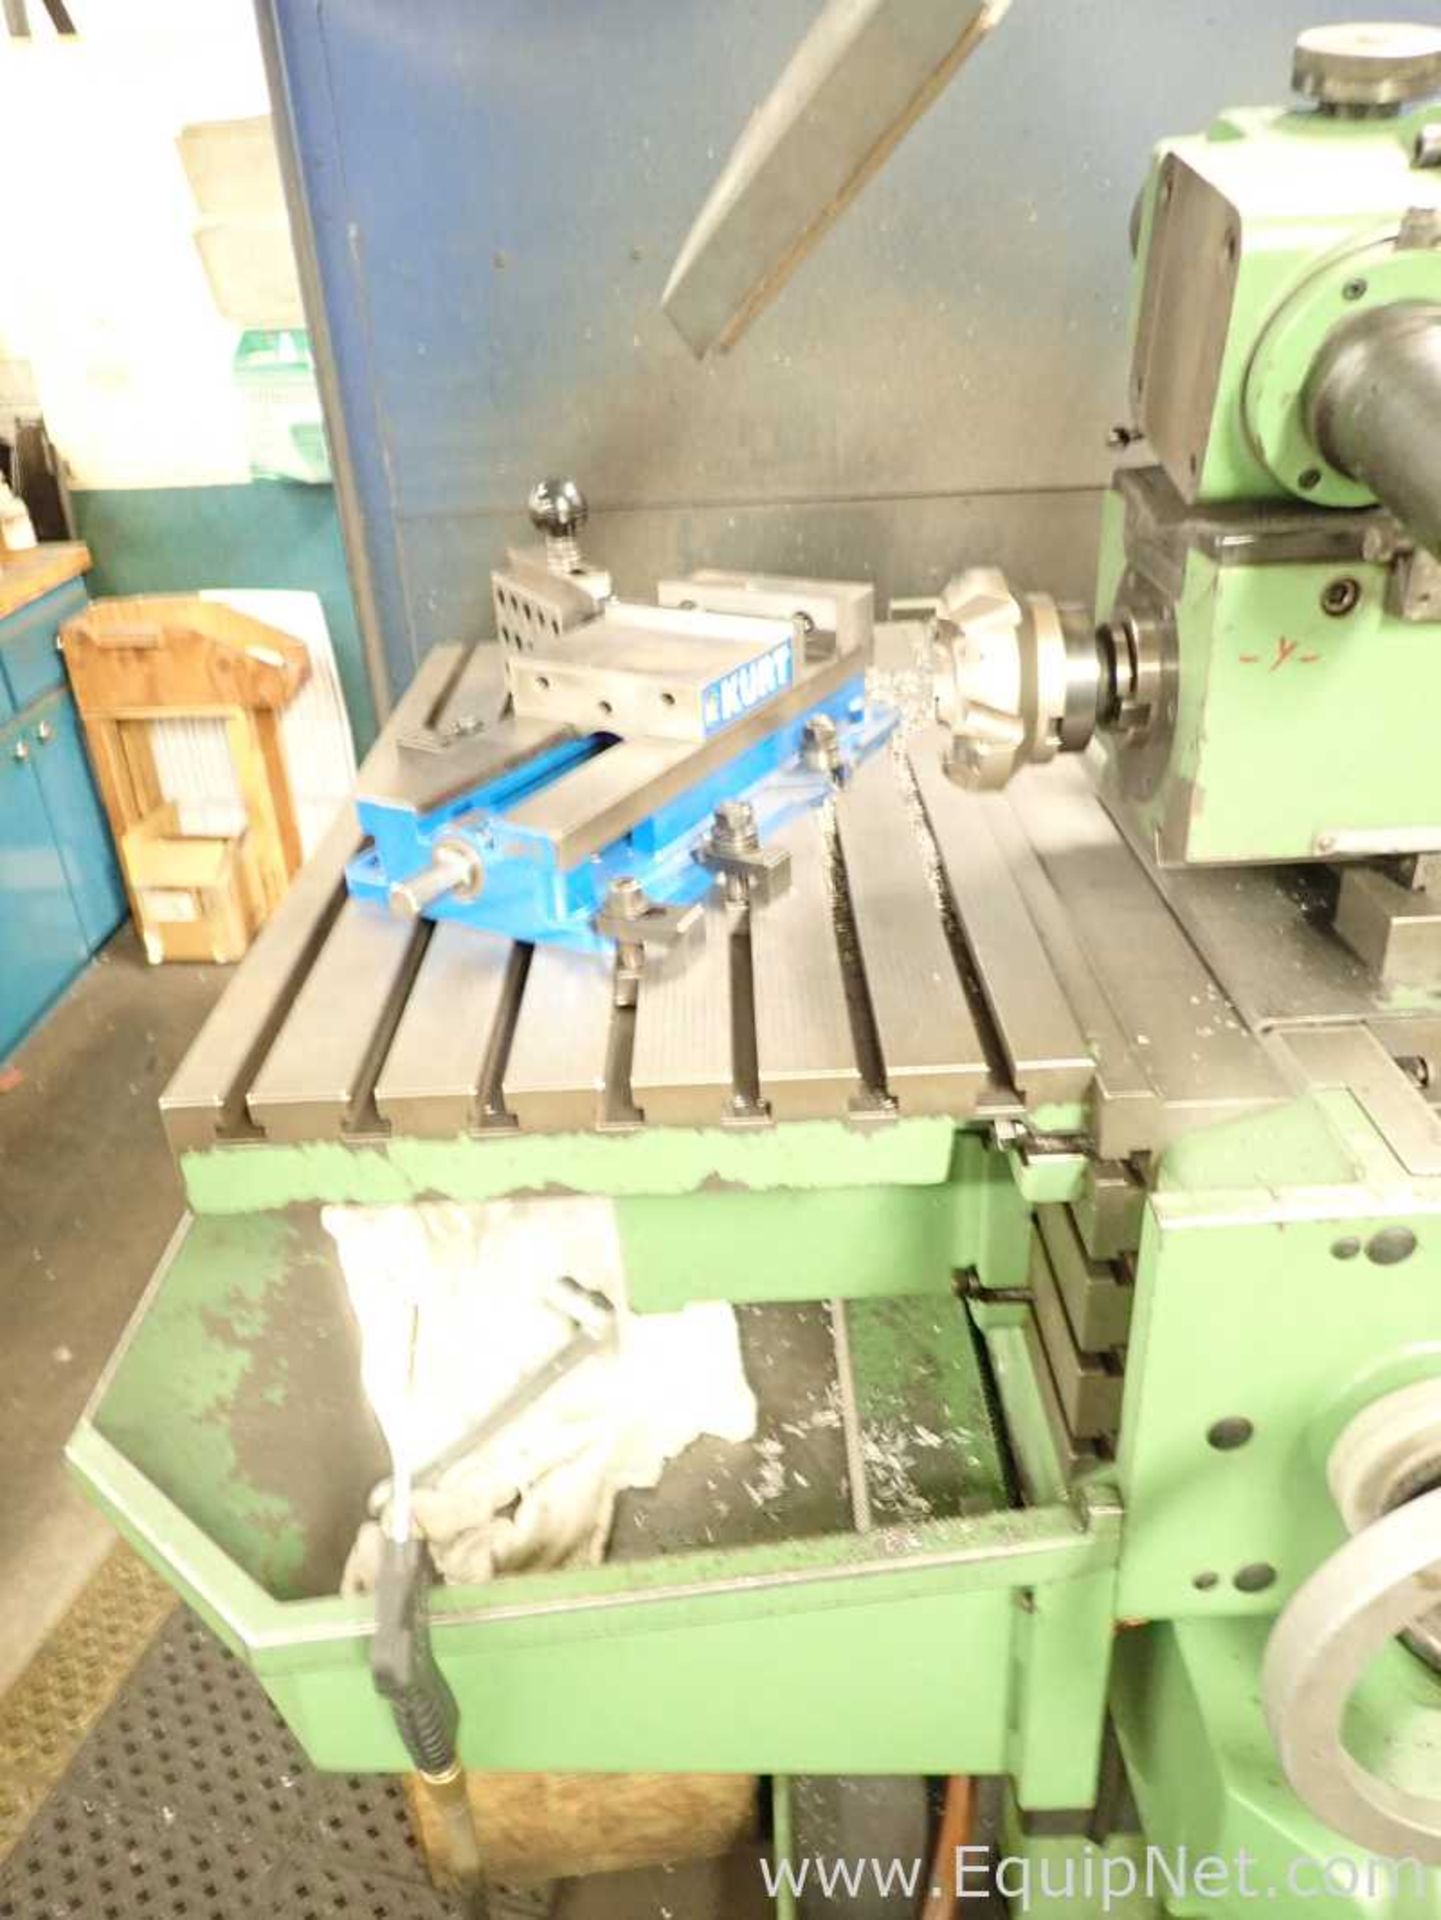 Deckel FP 4 M CNC Milling Machine - Image 4 of 5